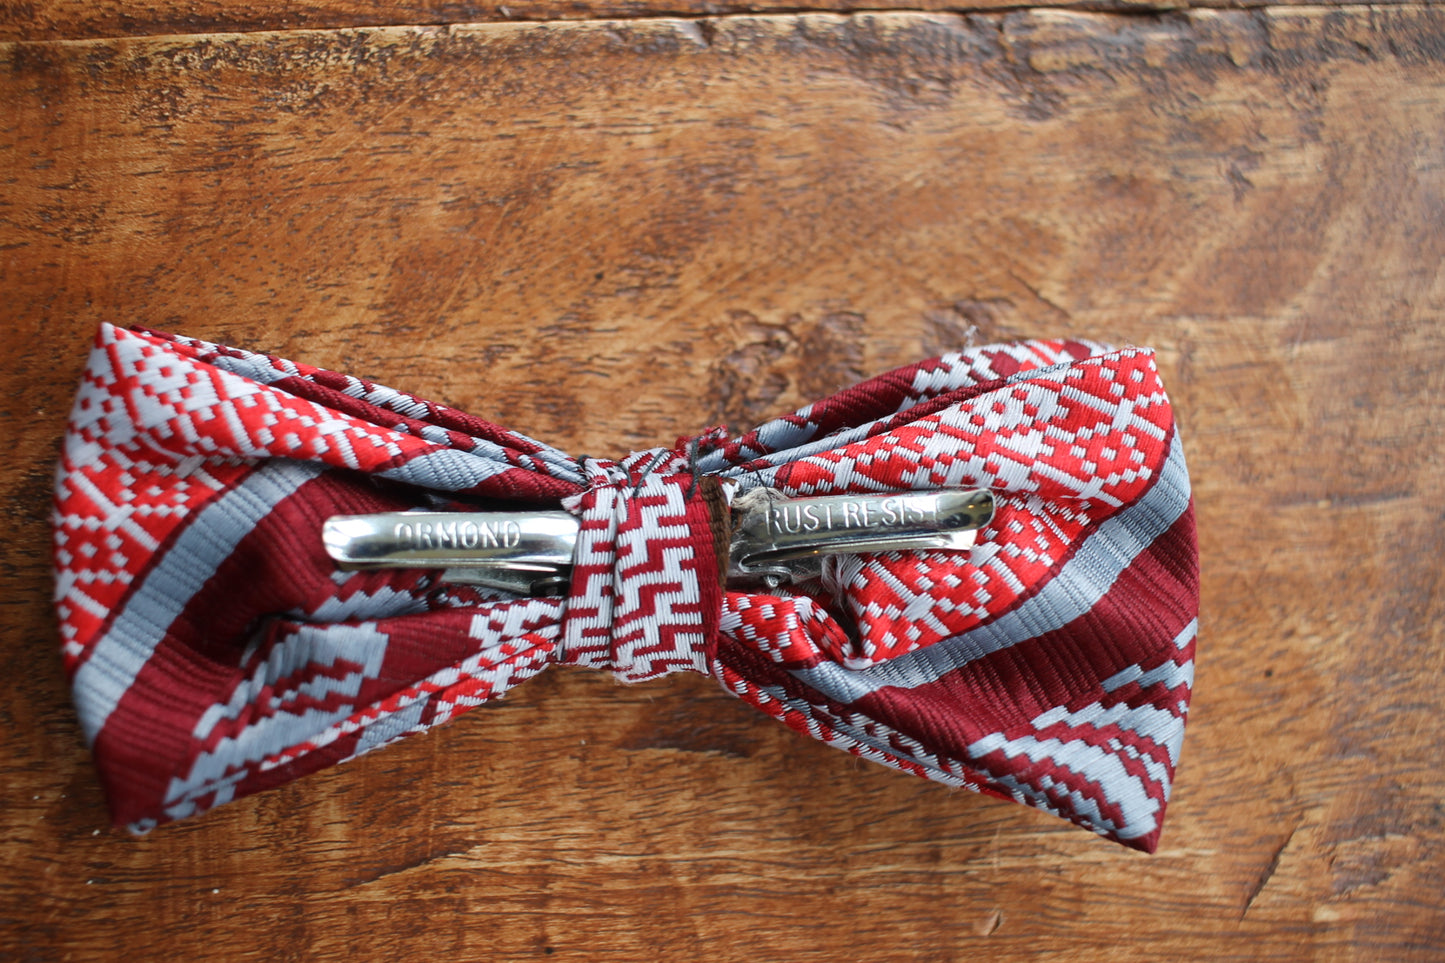 Vintage pre-tied clip on grey 2 tone red pattern bow tie